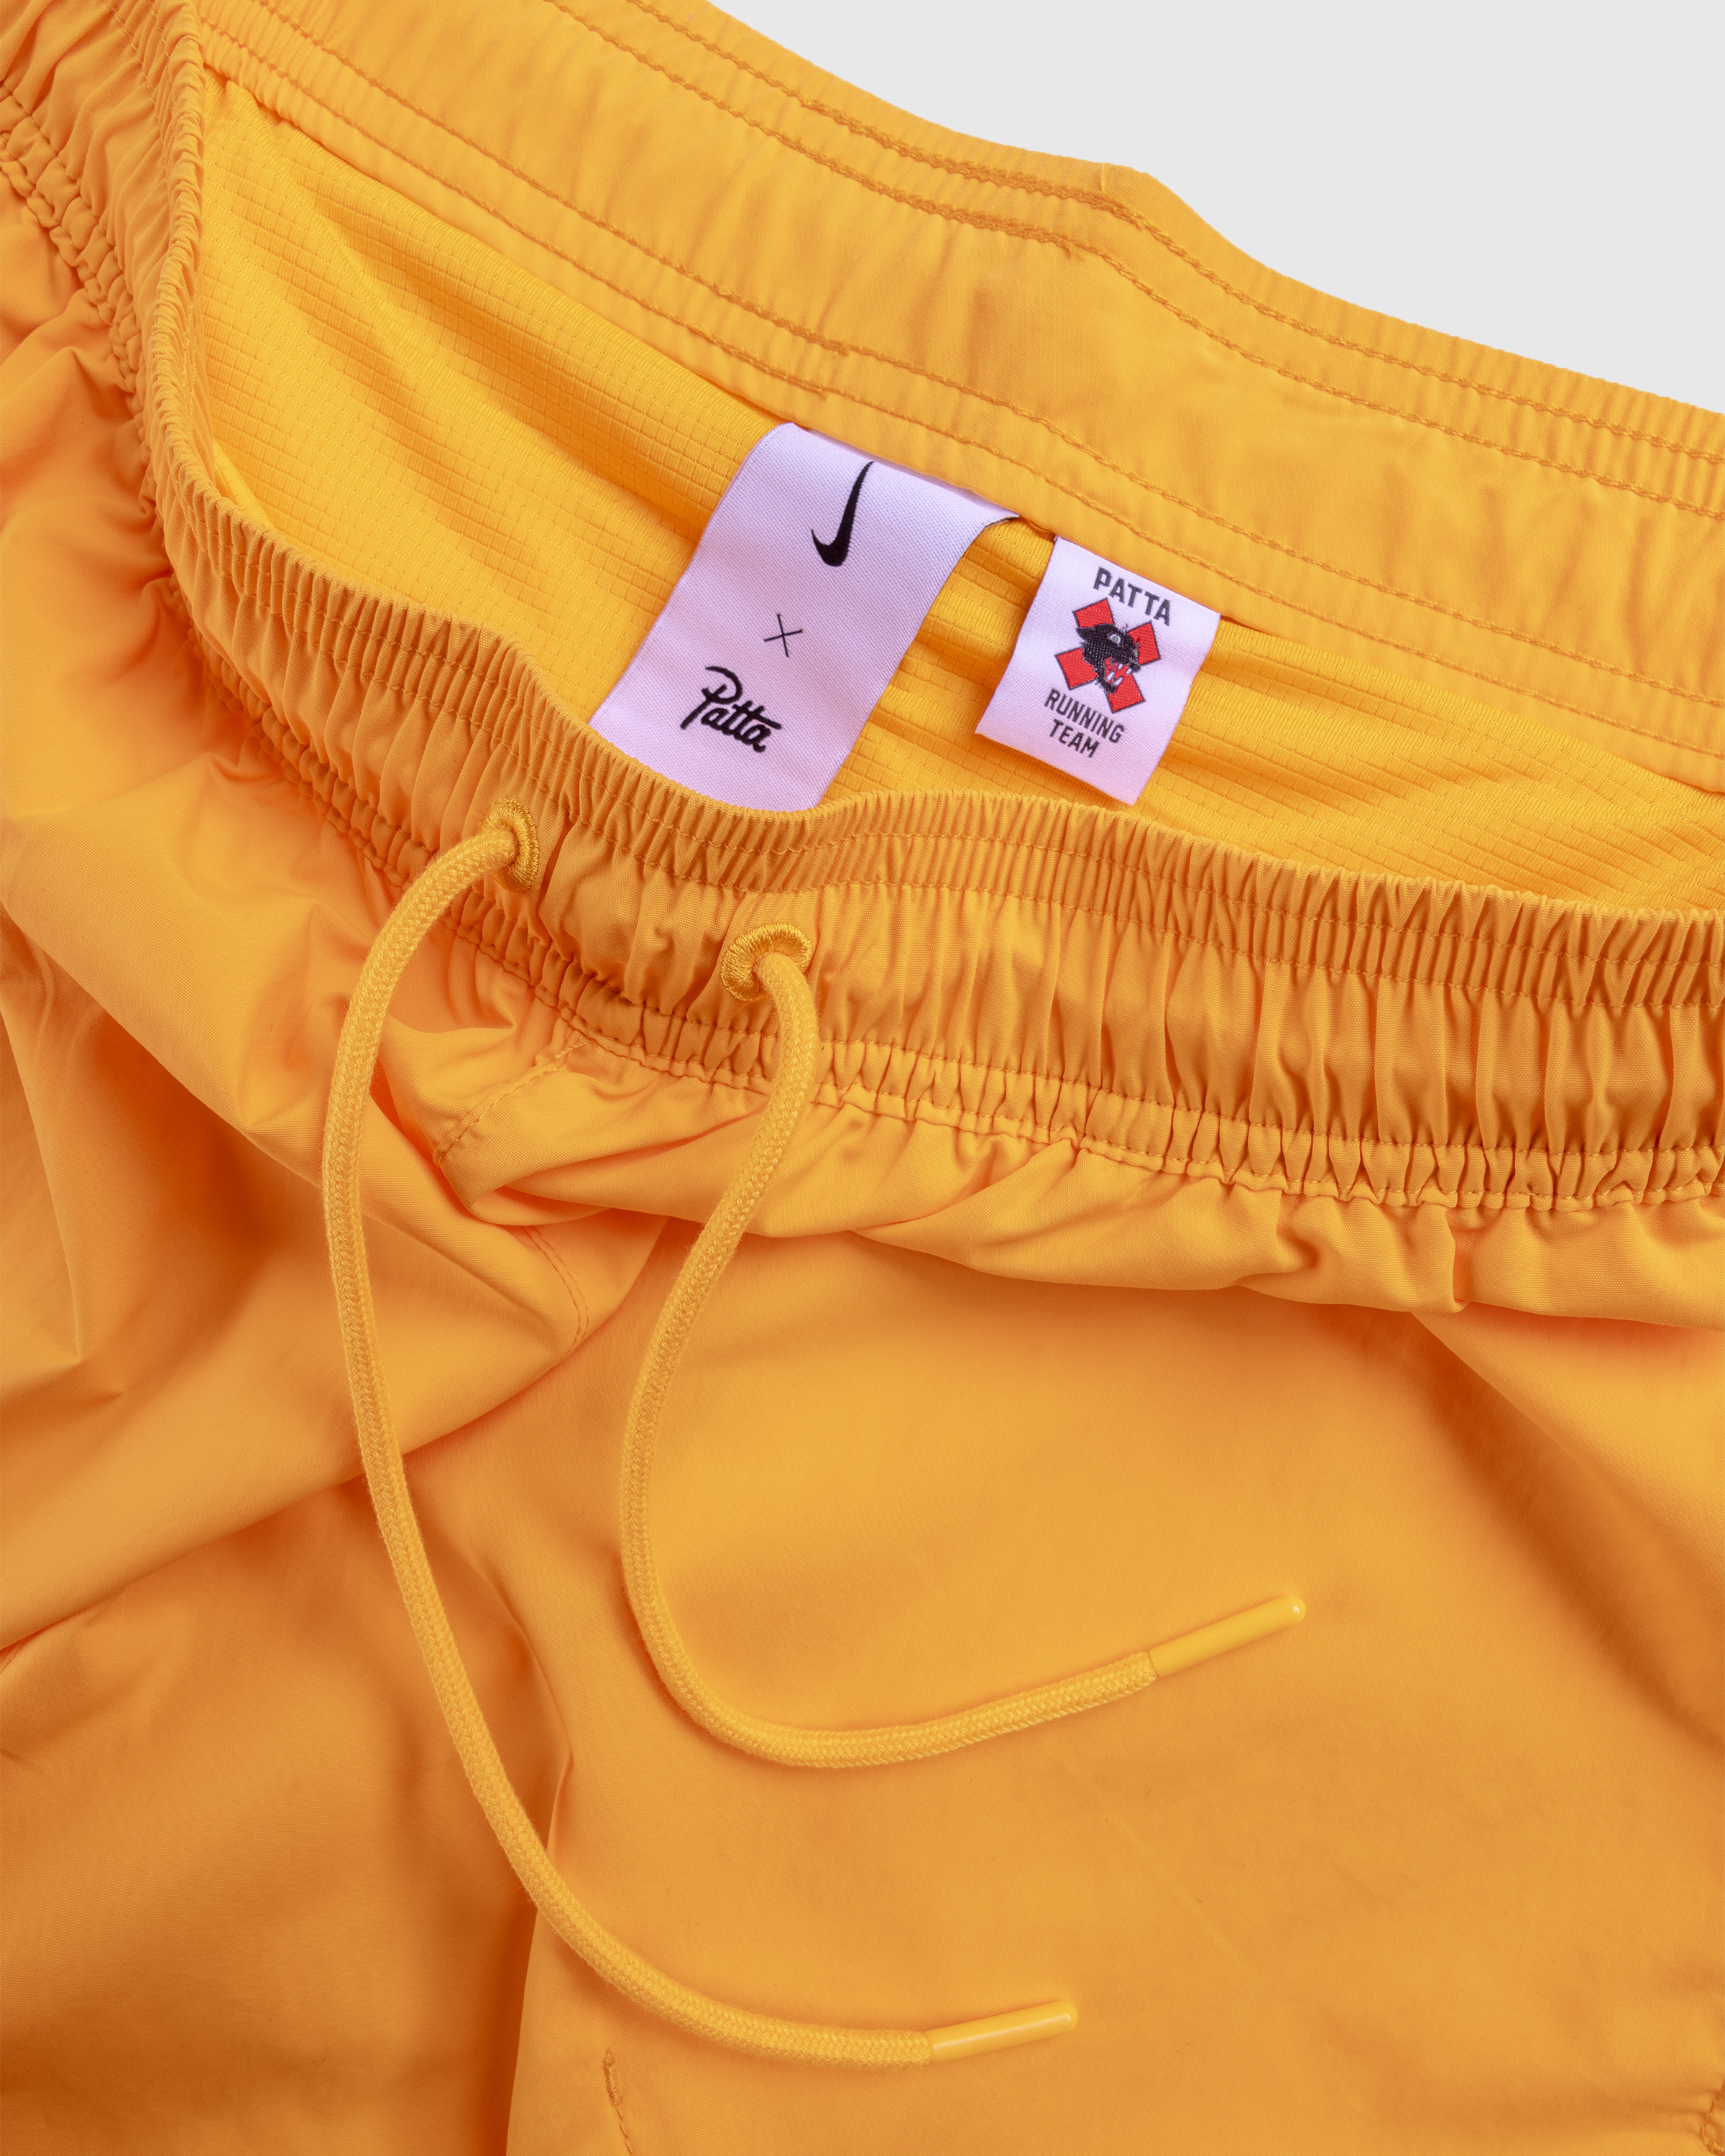 Nike x Patta – Men's Shorts Sundial - Active Shorts - Yellow - Image 8